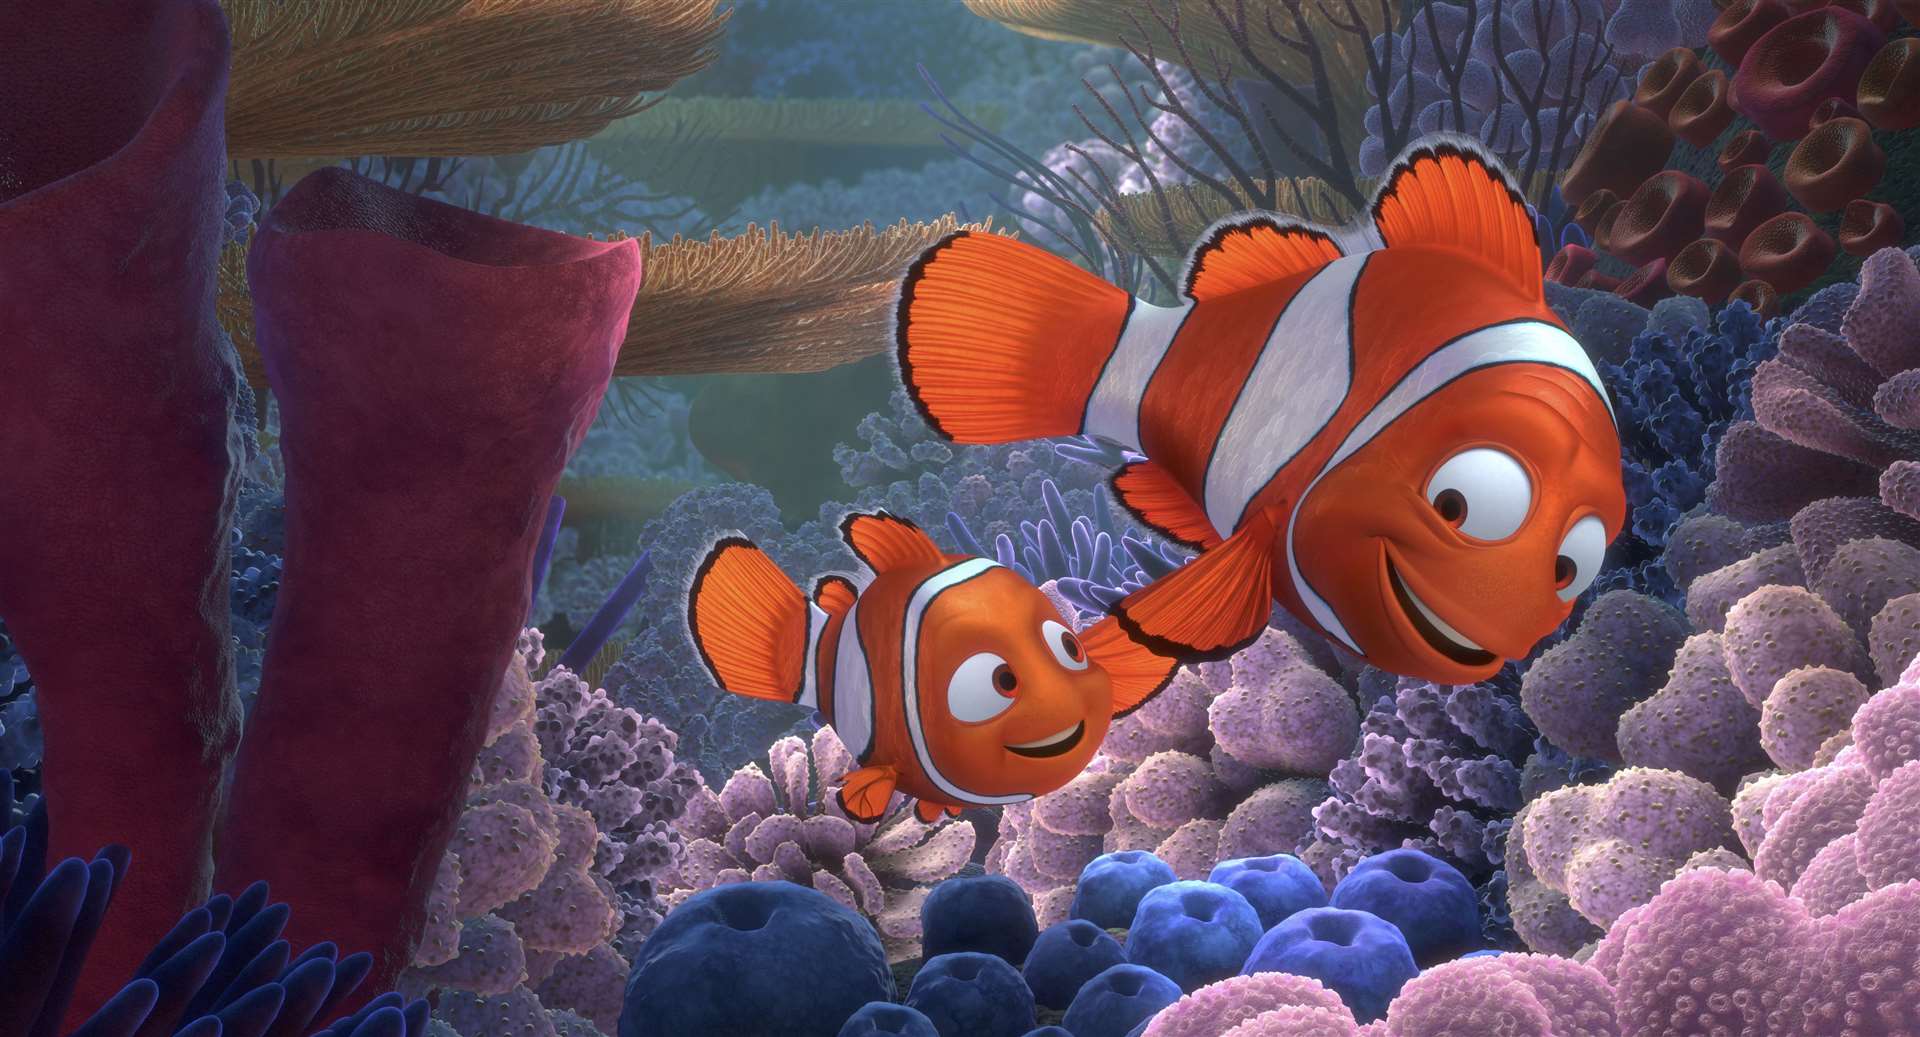 Finding Nemo will play on July 27. Copyright: ©2012 Disney/Pixar